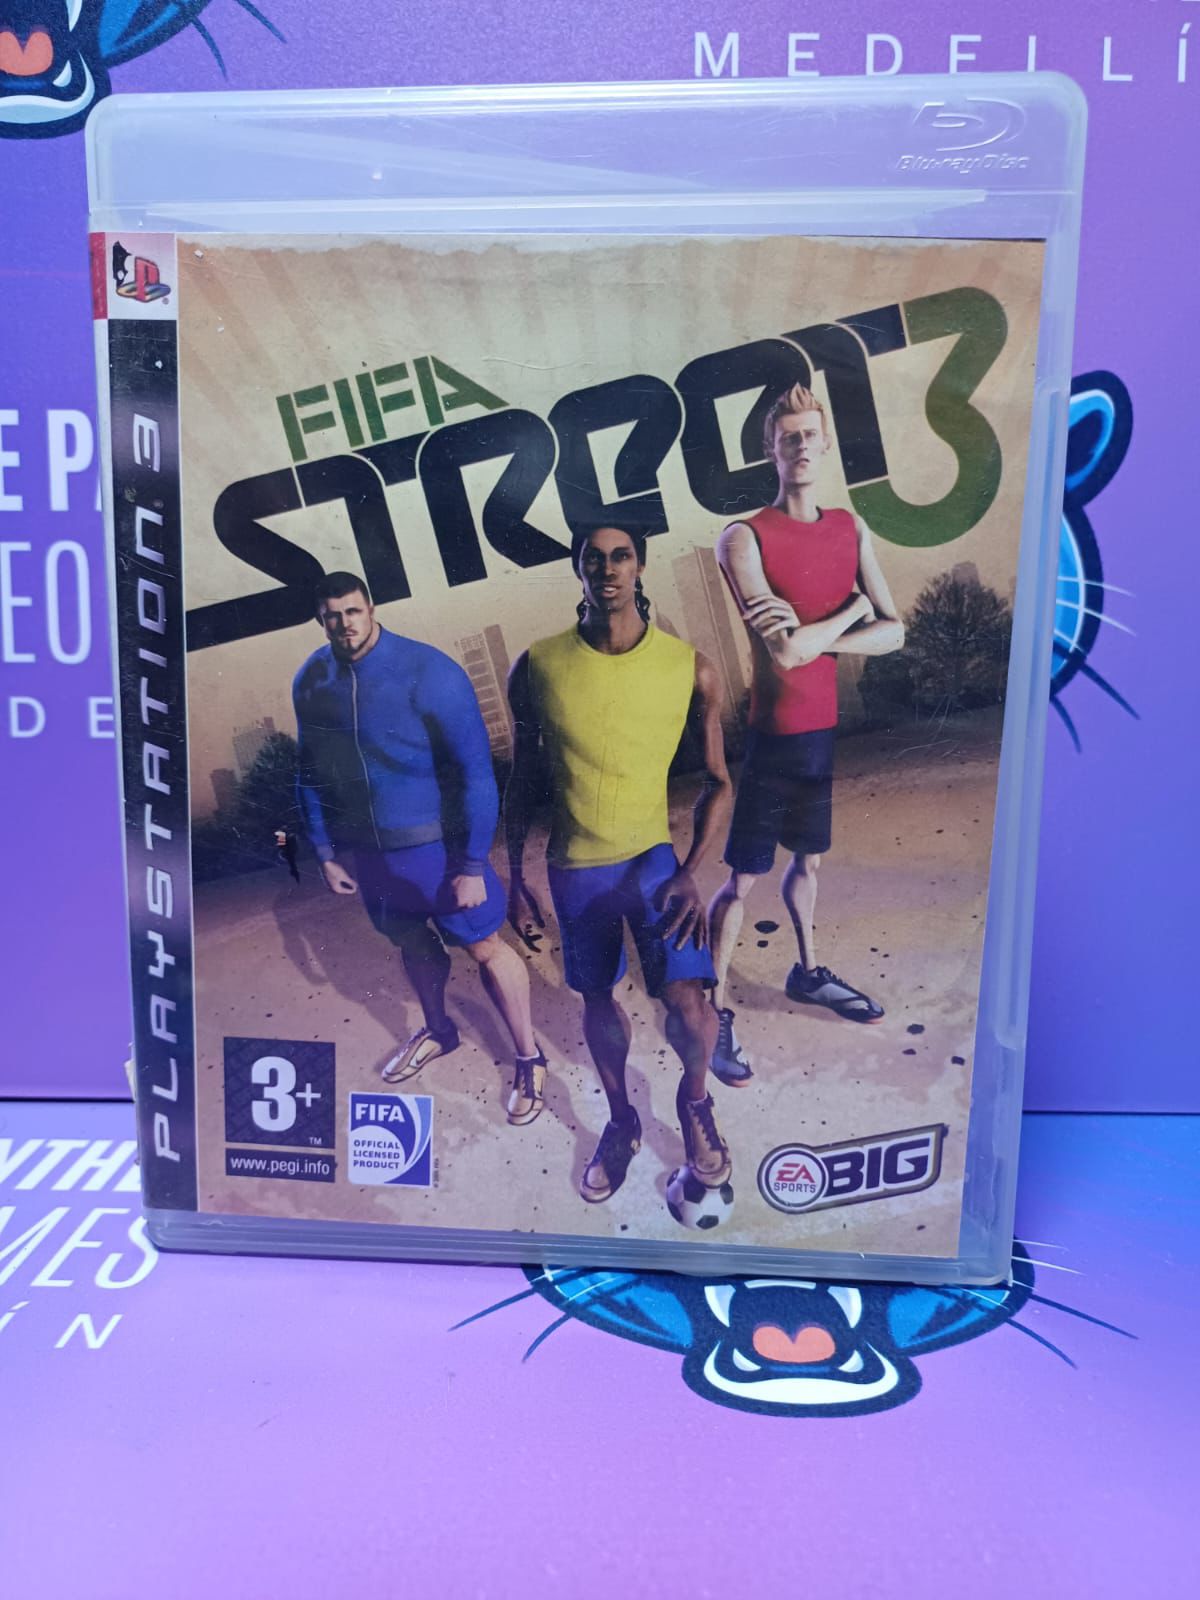 Fifa street 3-Playstation 3